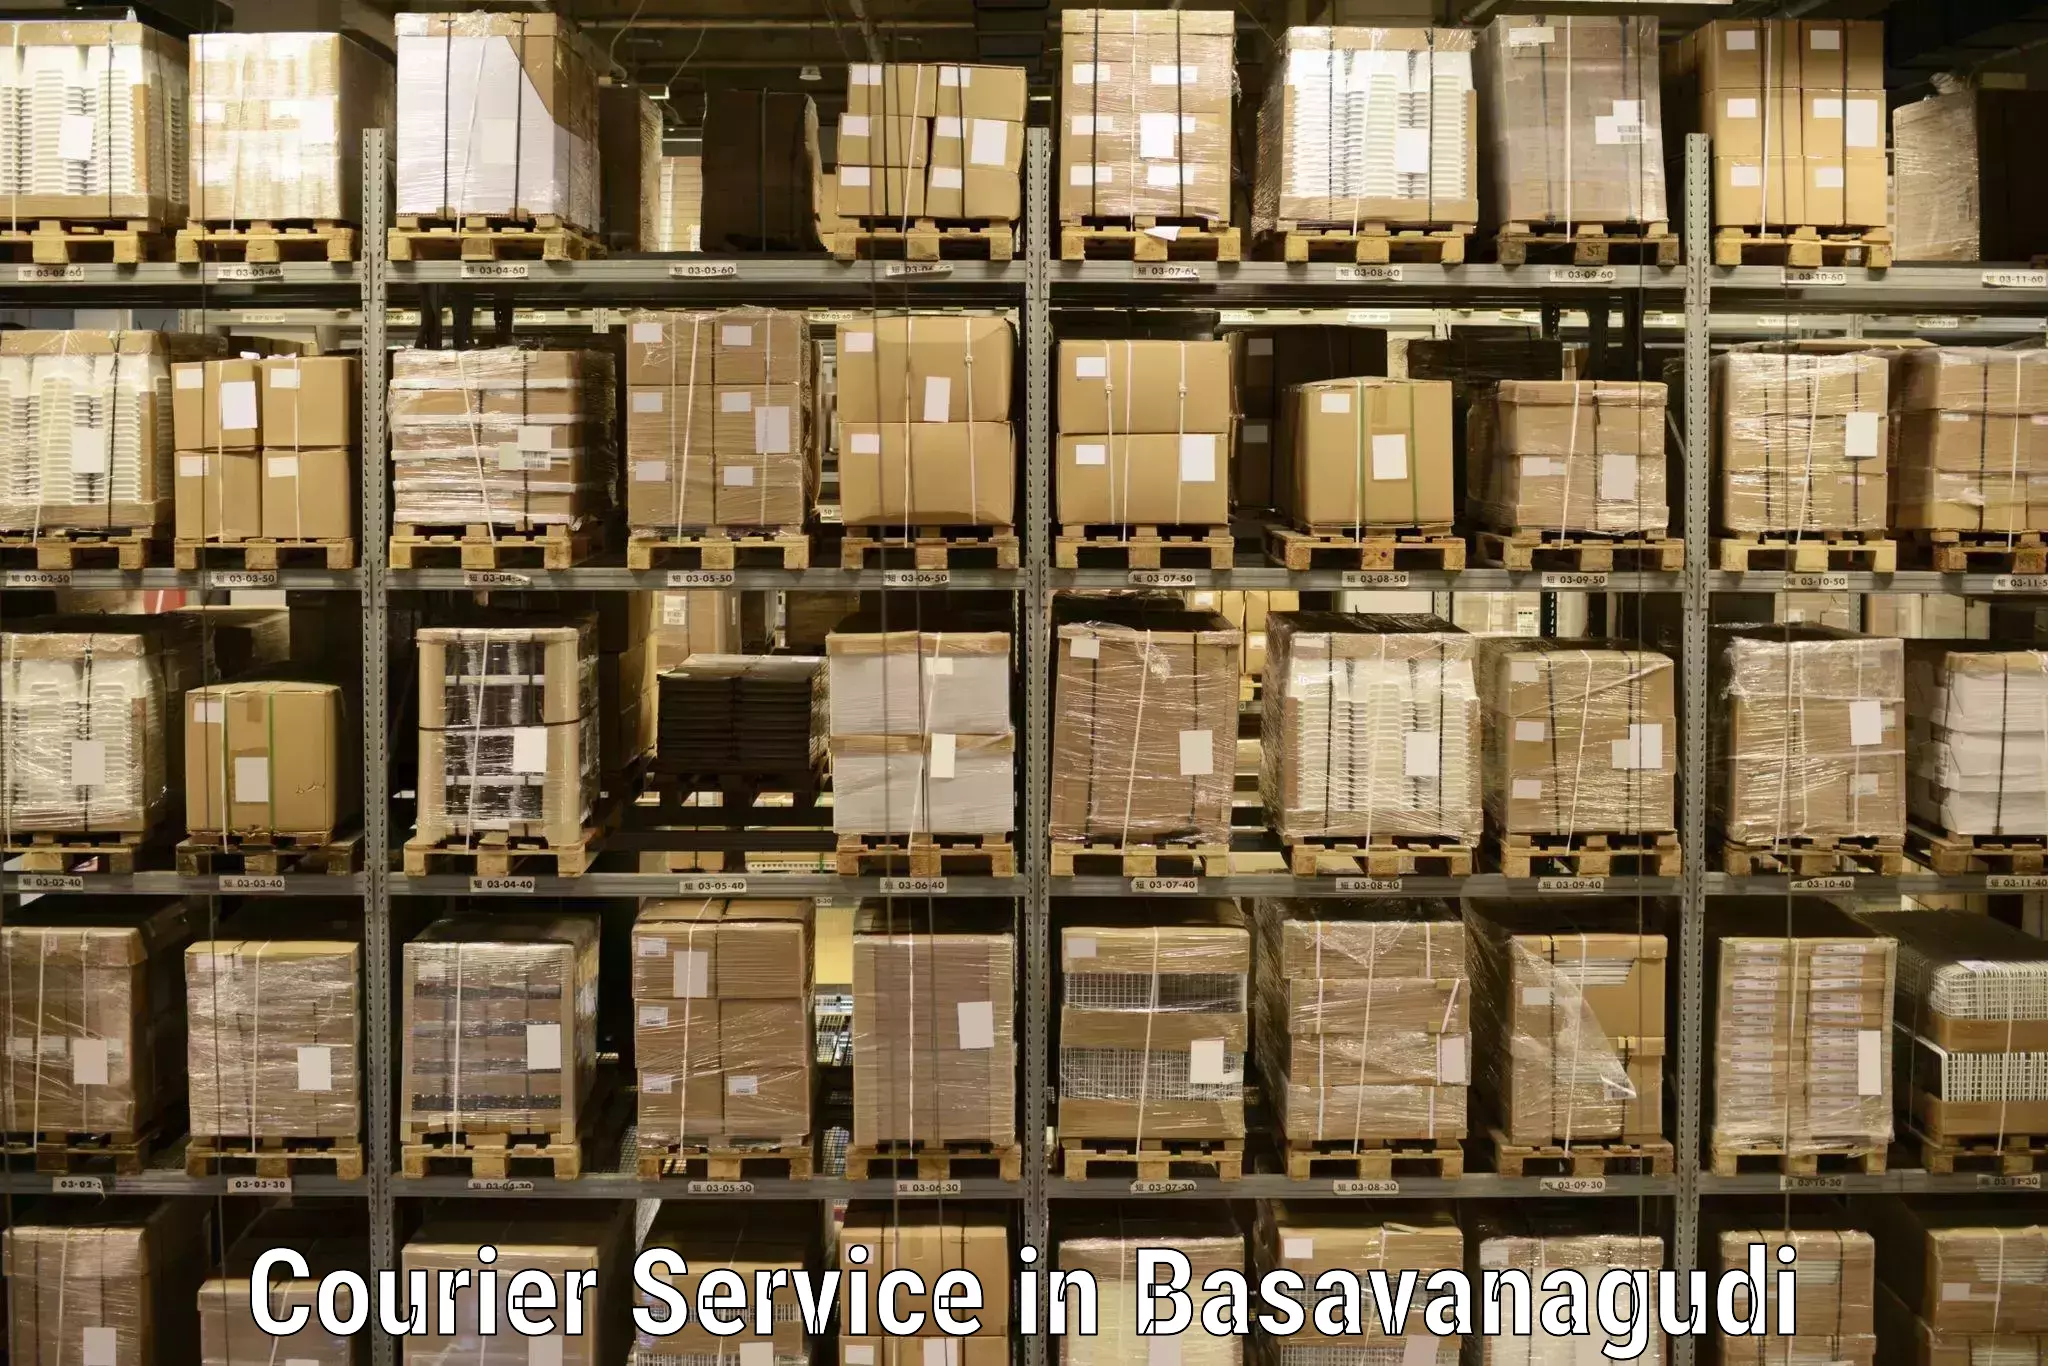 Expedited shipping solutions in Basavanagudi